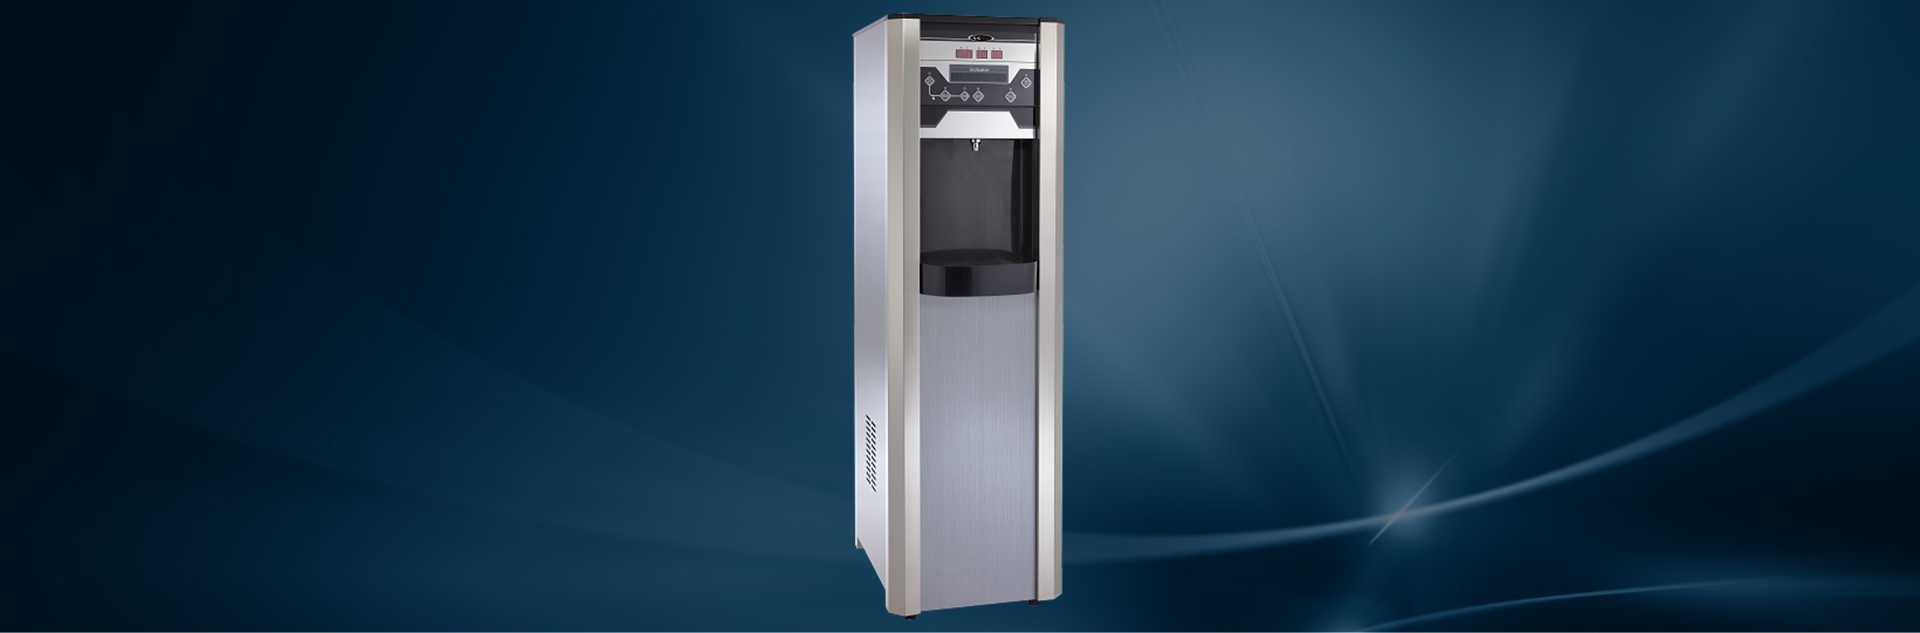 LC-6066 SeriesIntelligent Energy-Saving Water Dispenser